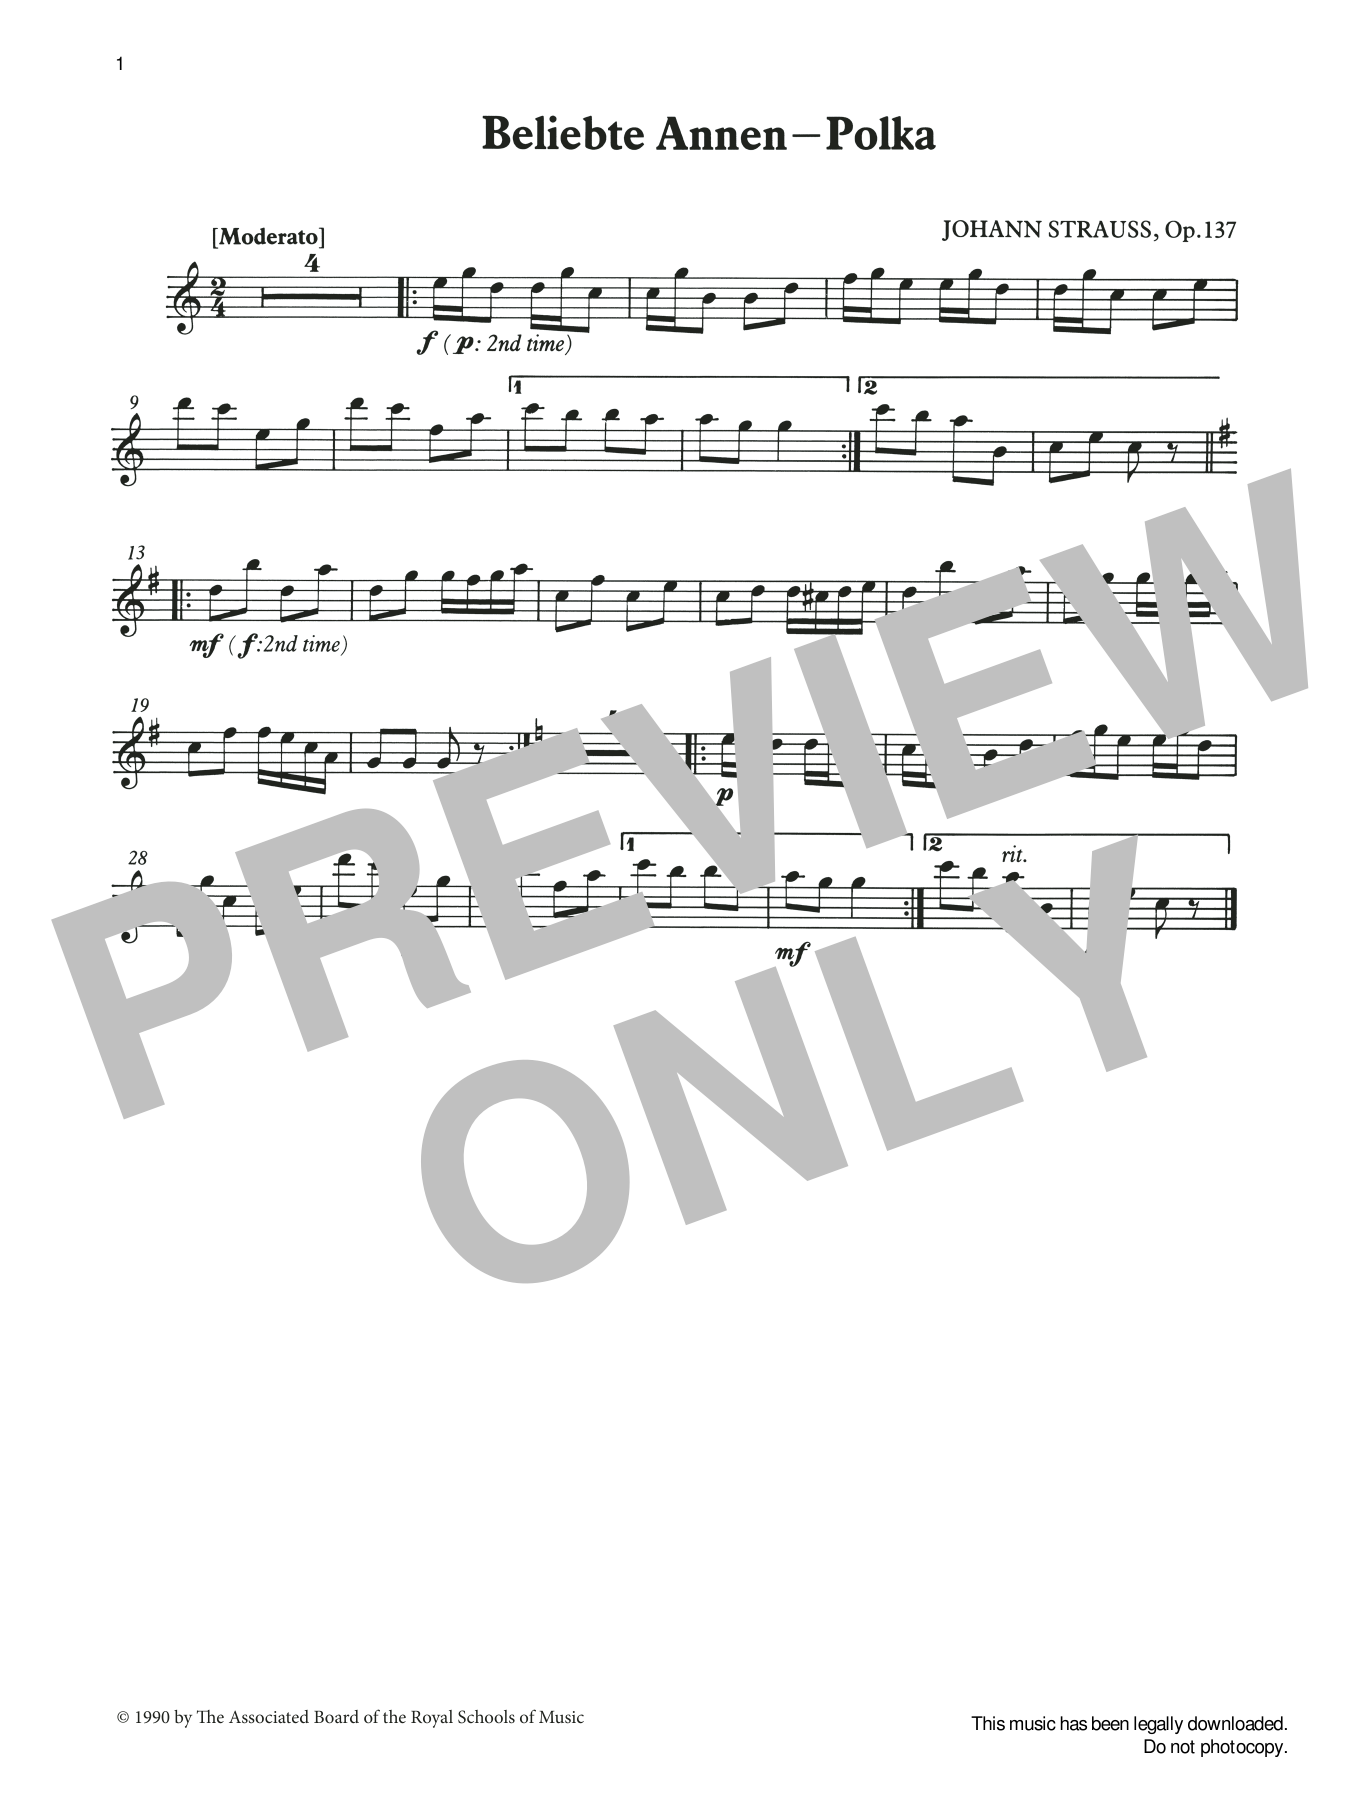 Download Johann Strauss I Beliebte Annen - Polka (score & part) f Sheet Music